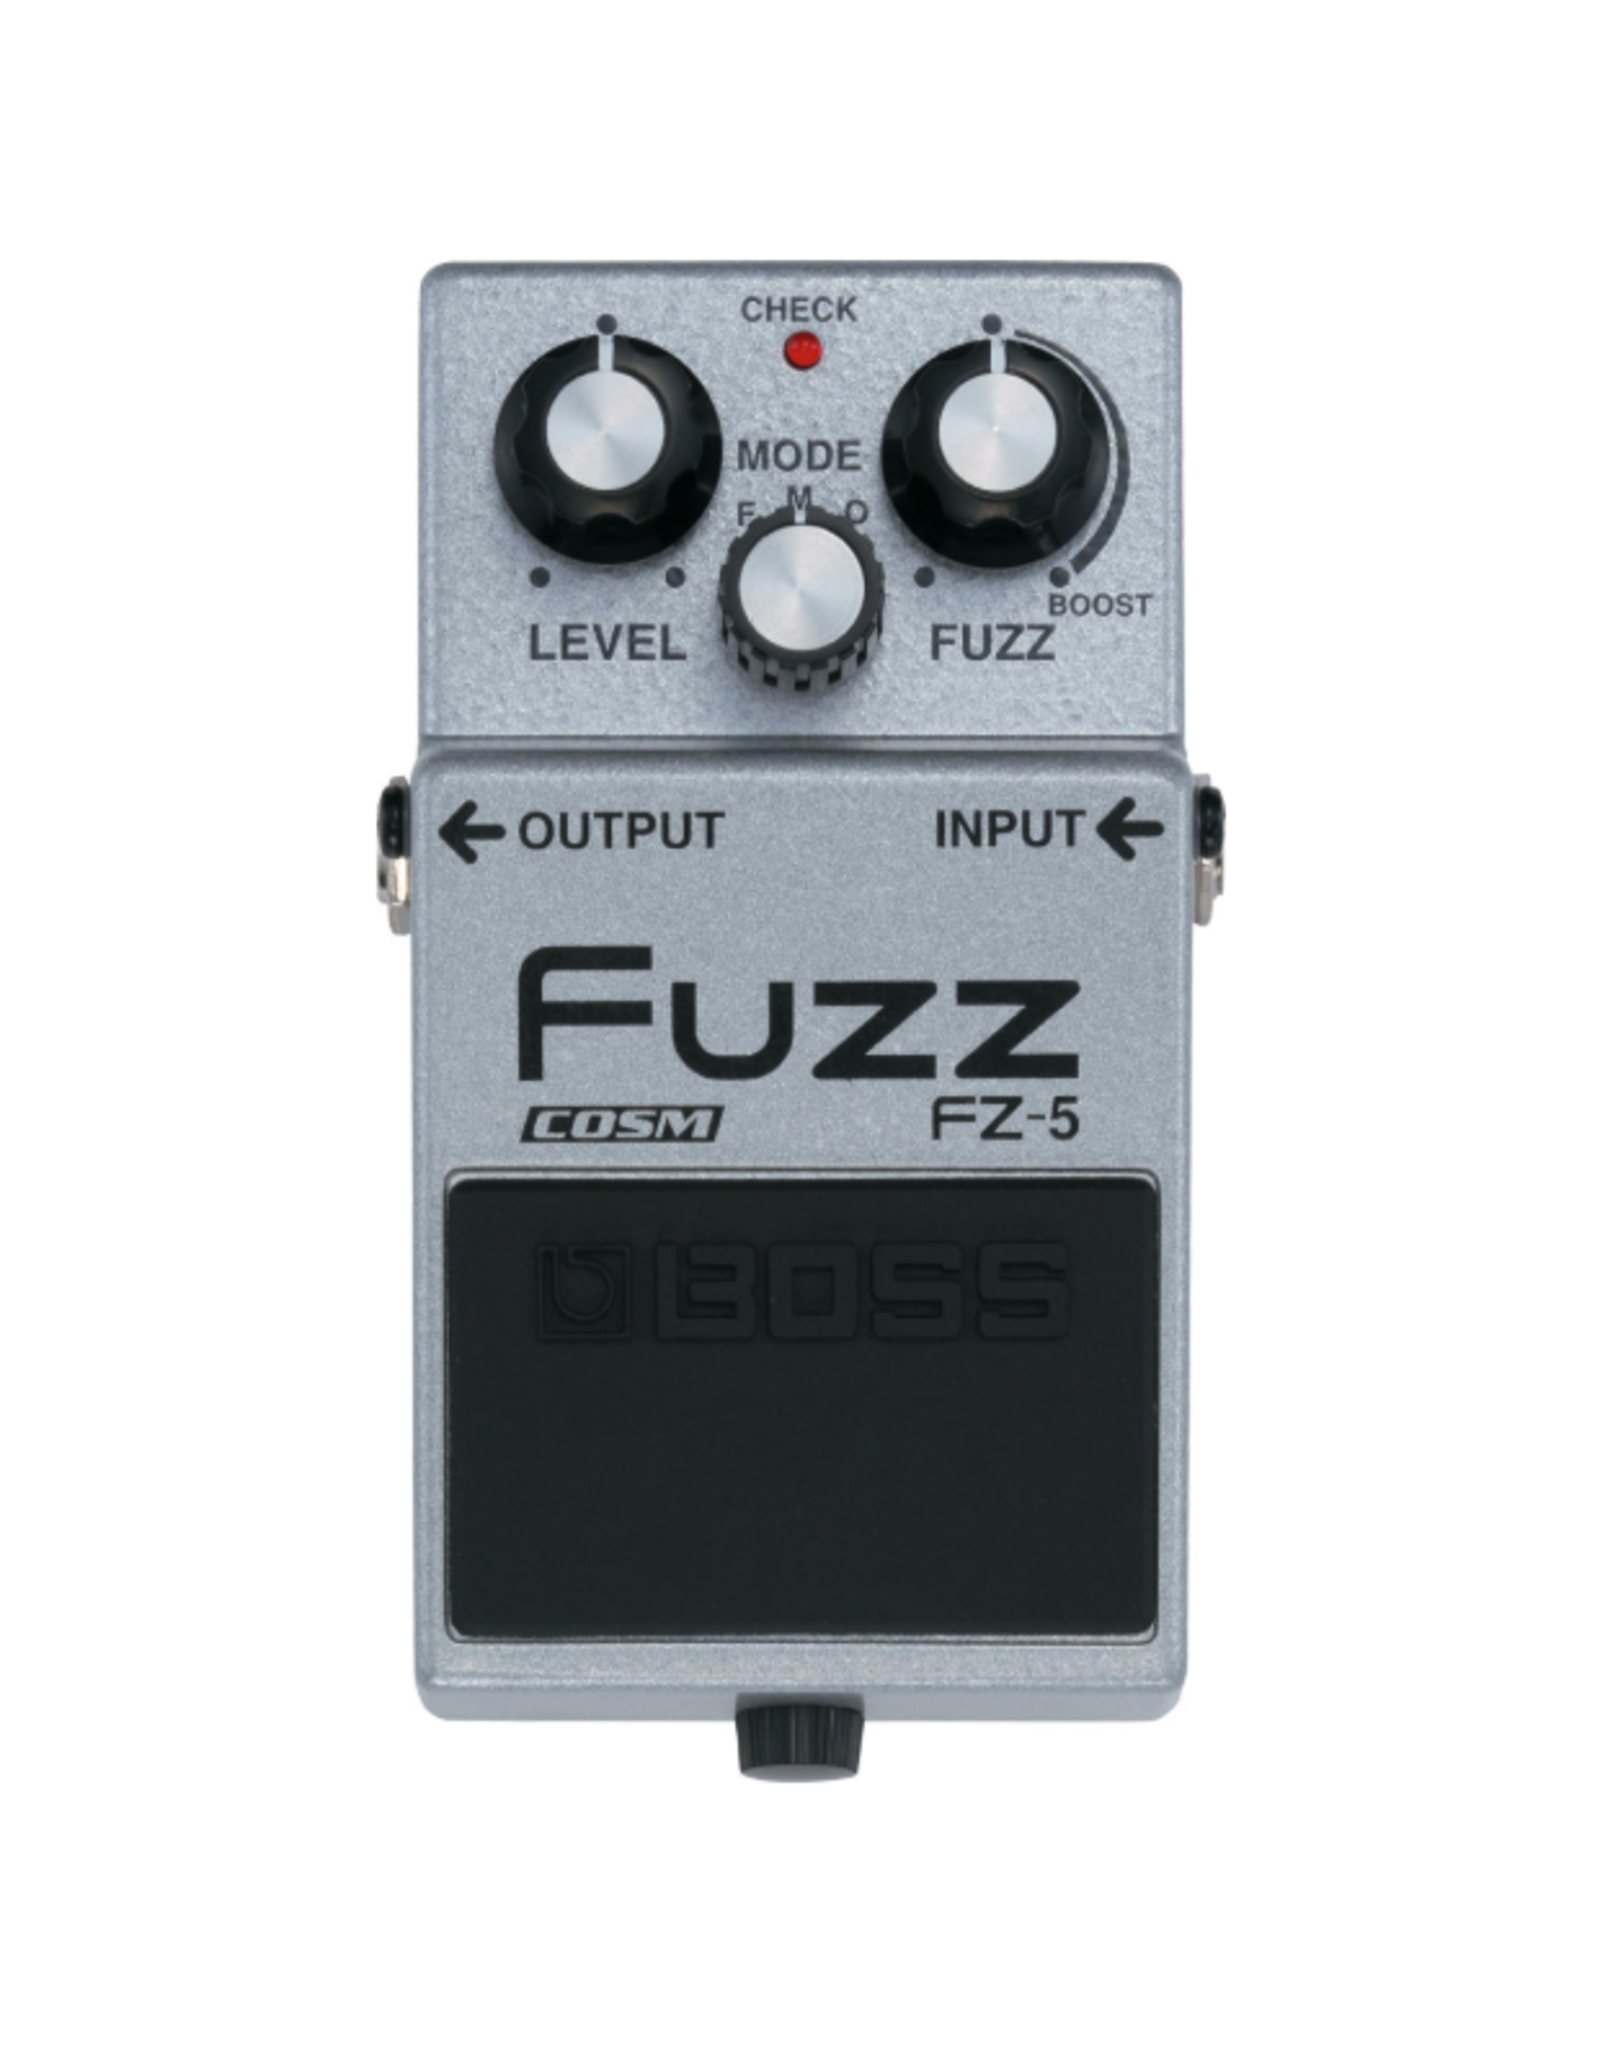 Boss Boss FZ-5 Fuzz - Store Demo Model